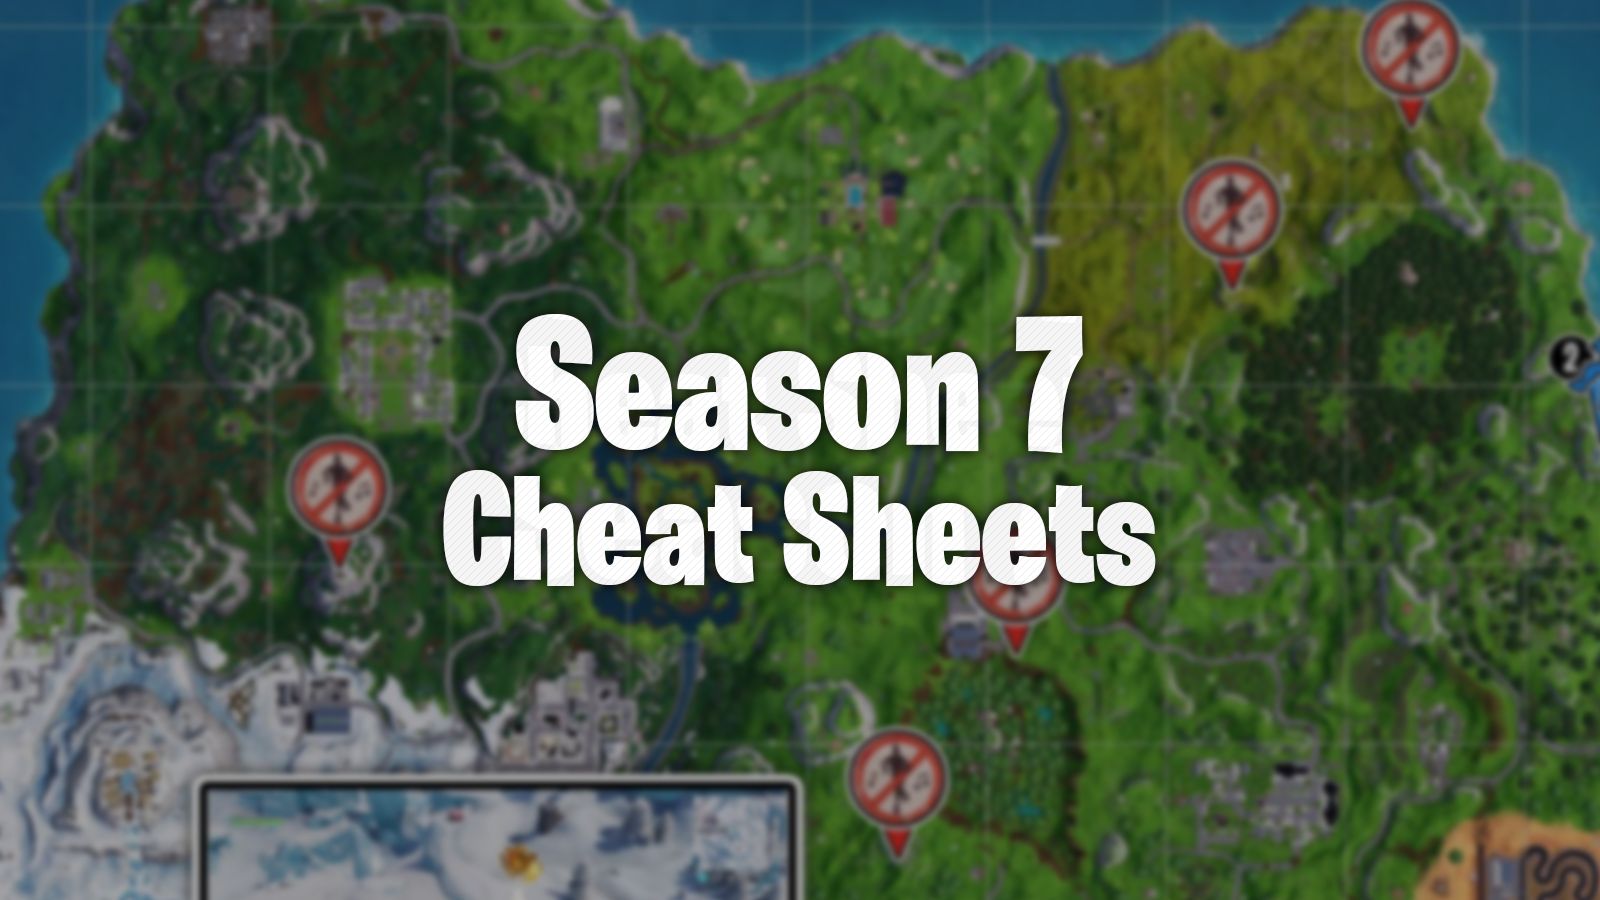 fortnite season 7 challenge cheat sheets - week 7 challenges fortnite cheat sheet